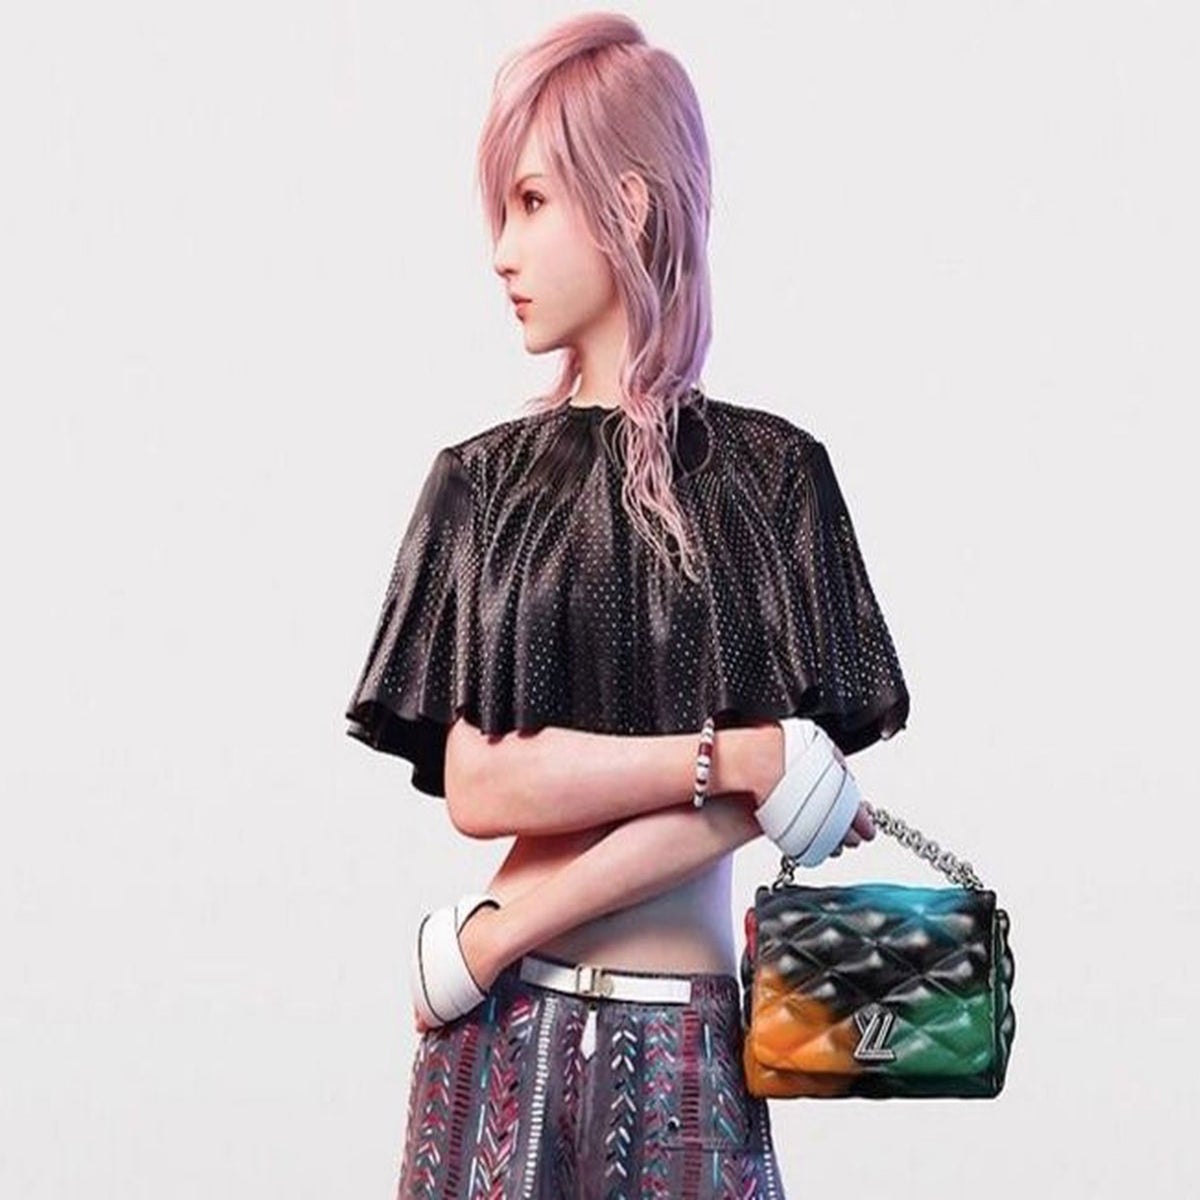 Louis Vuitton x Final Fantasy Fashion Promotion – Marketing Mix